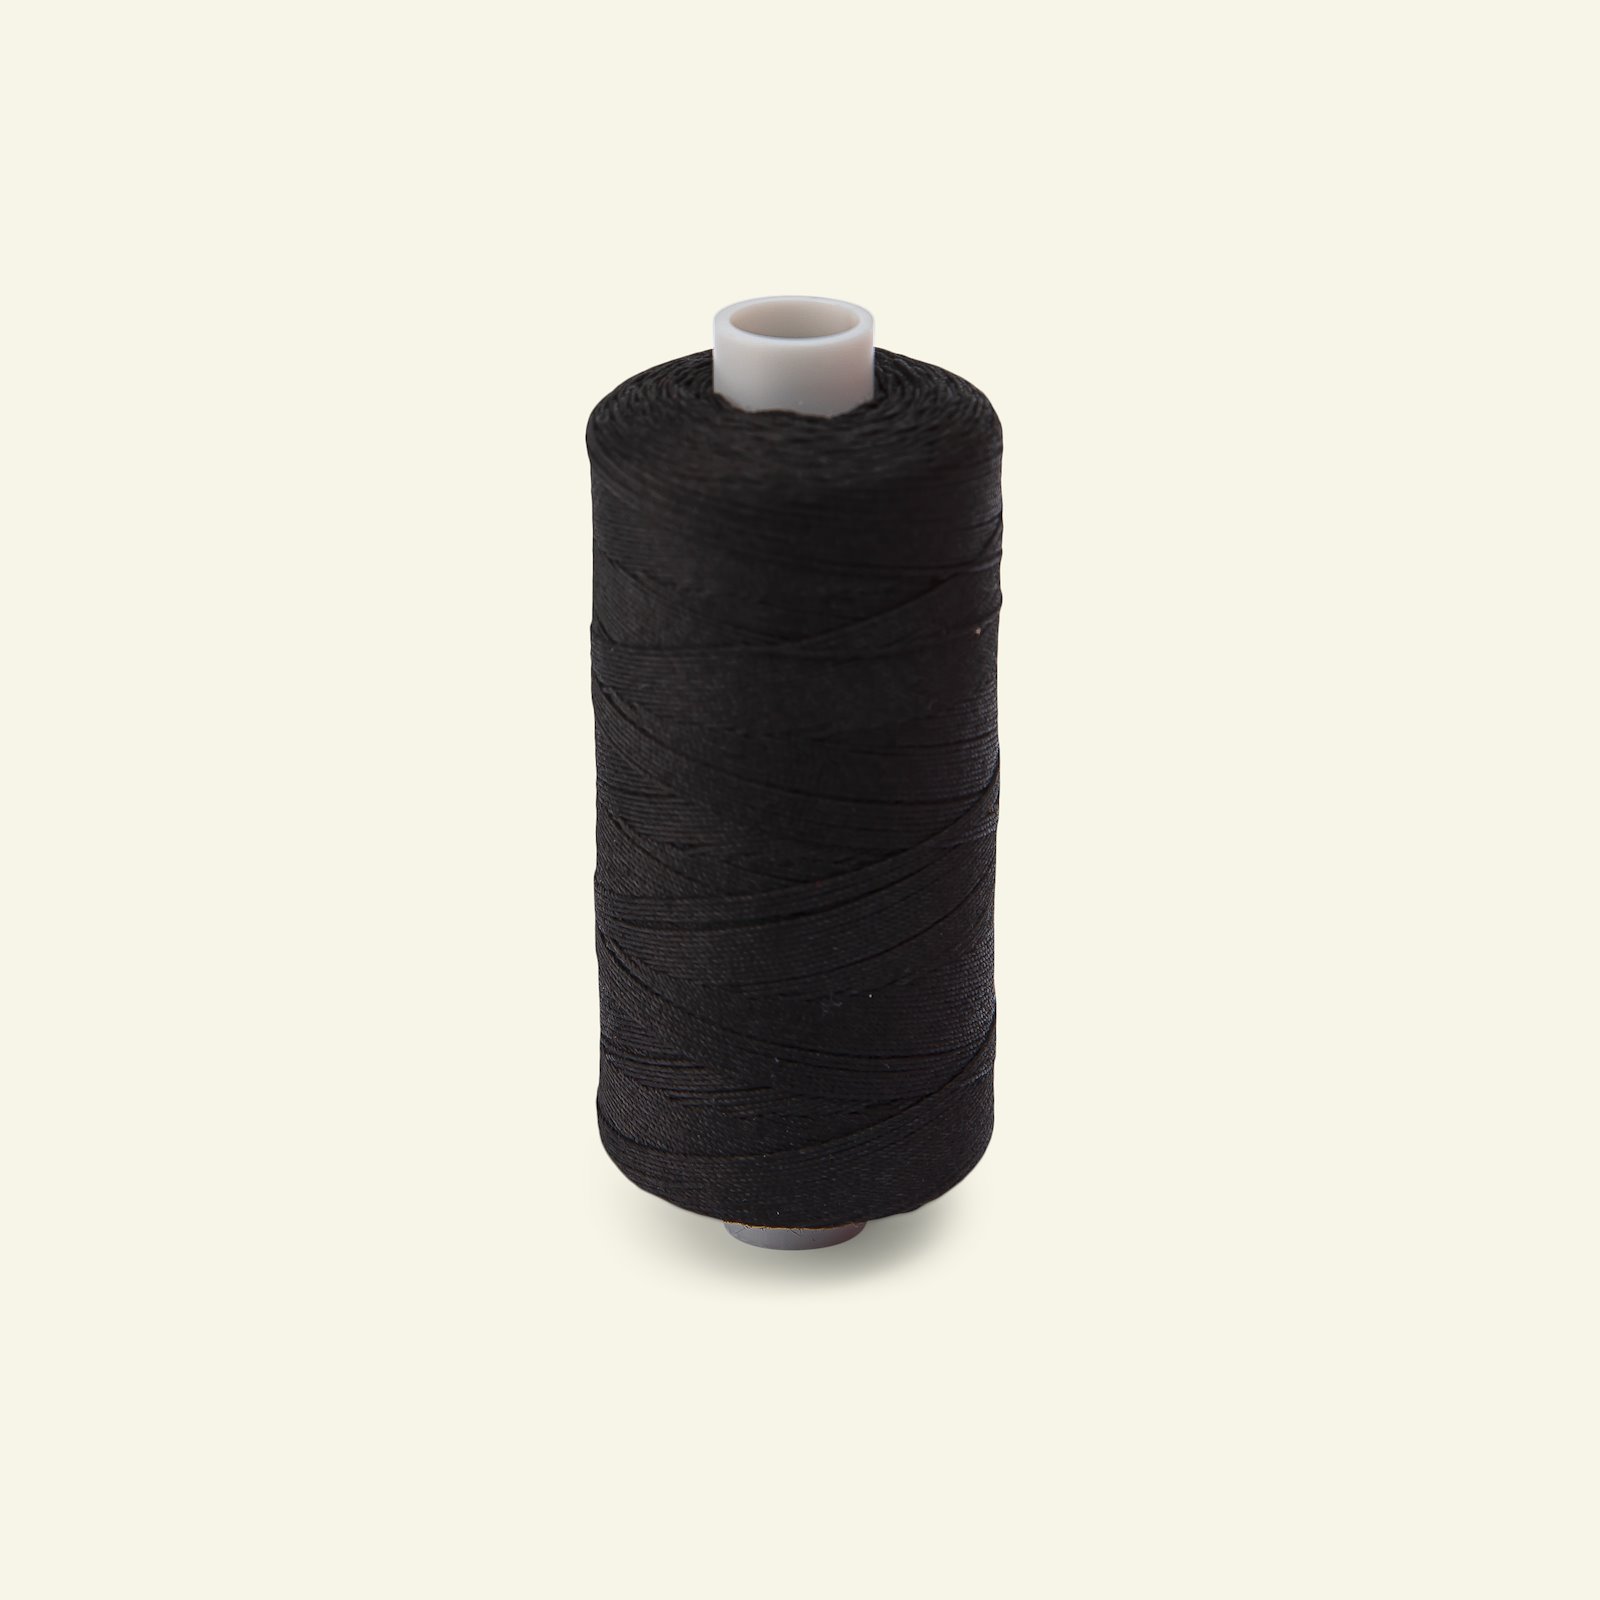 Upholstery thread black 300m 16043_pack